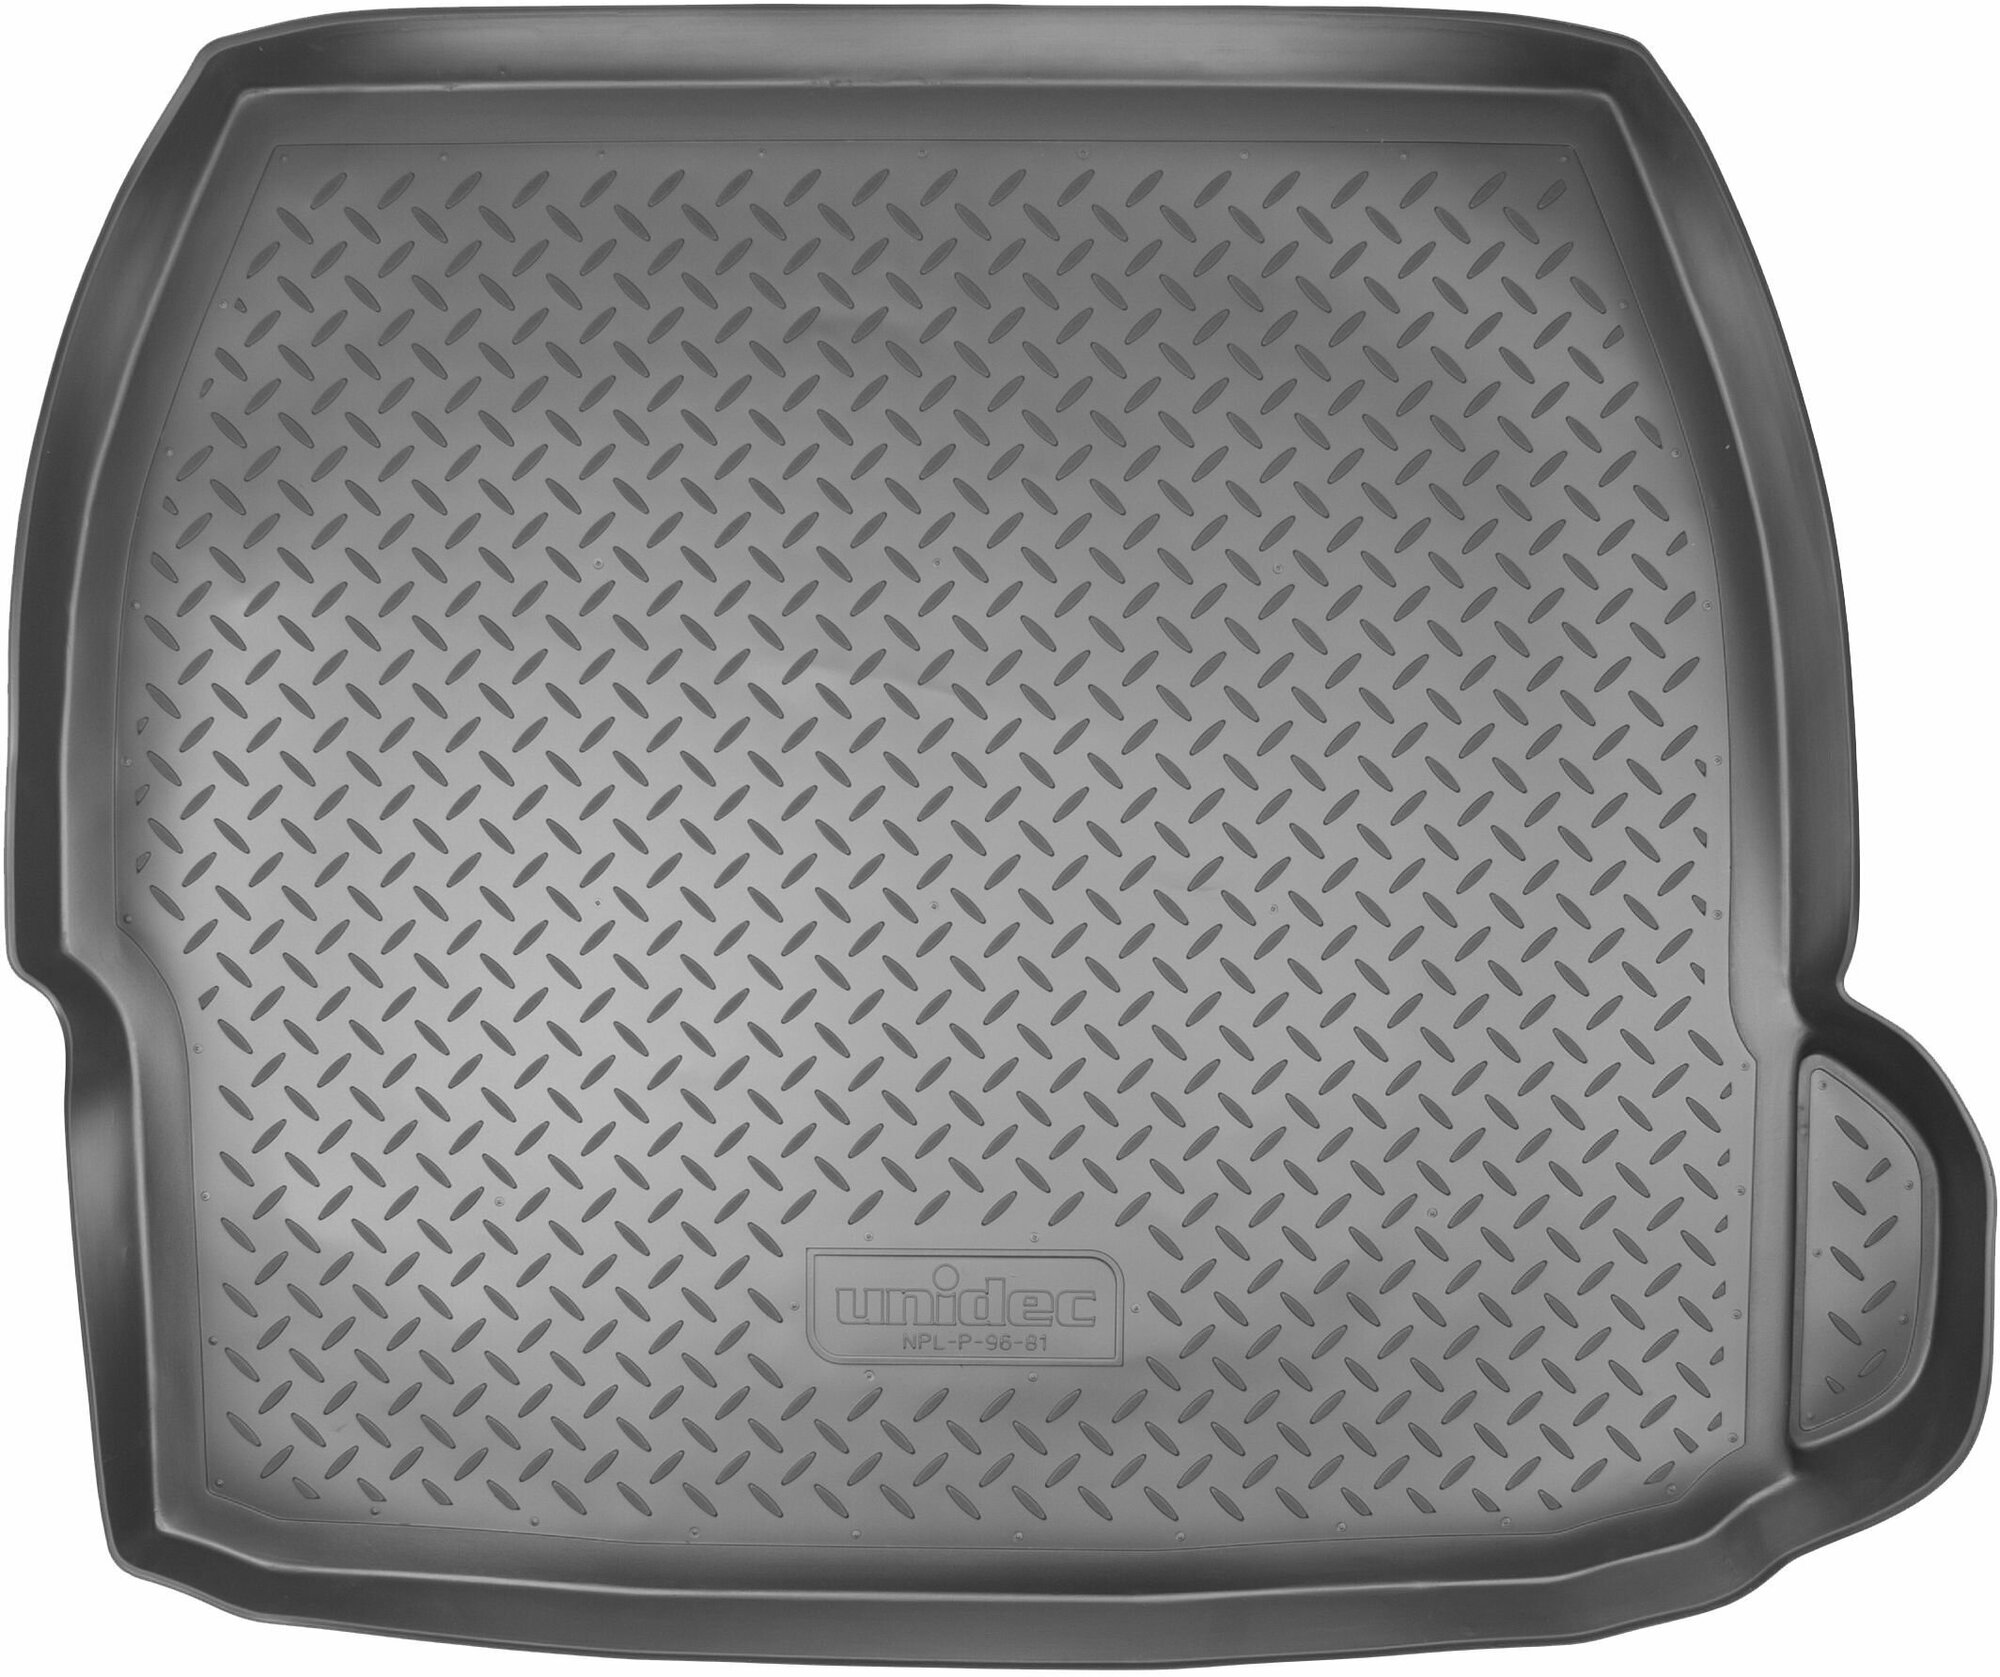 Коврик в багажник (полиуретан) для Volvo S80 SD- седан (2006-) (NPL-P-96-81)